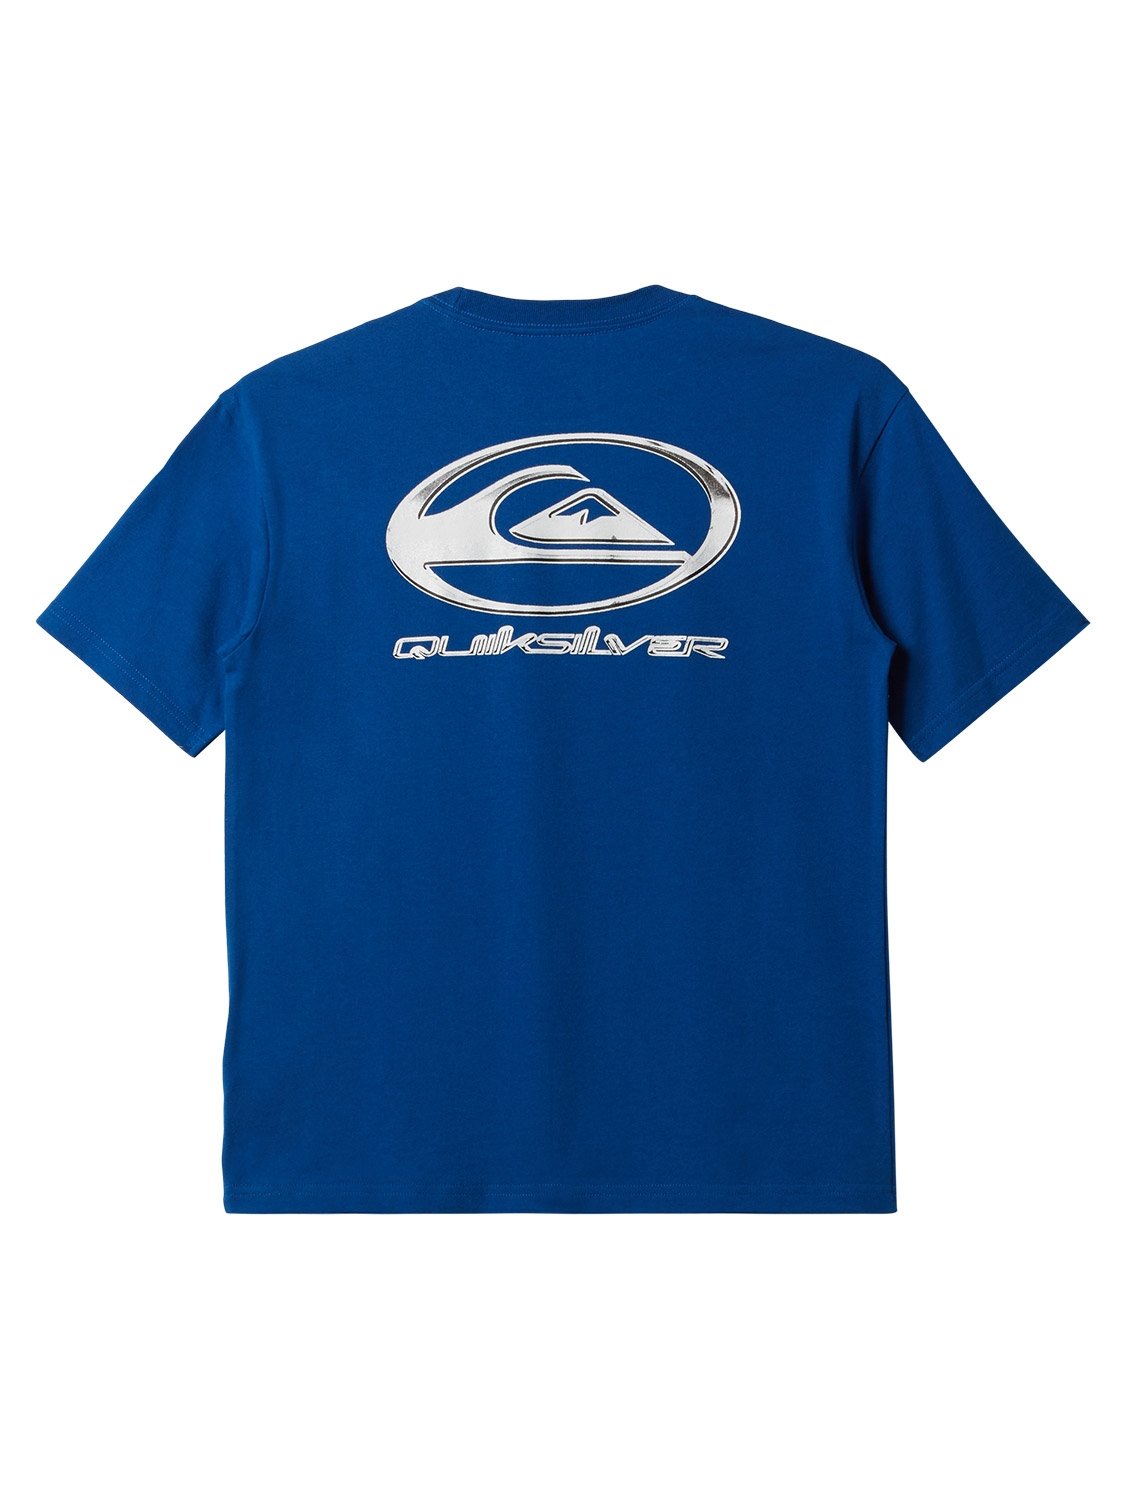 Quiksilver Boys Chrome Logo T-Shirt